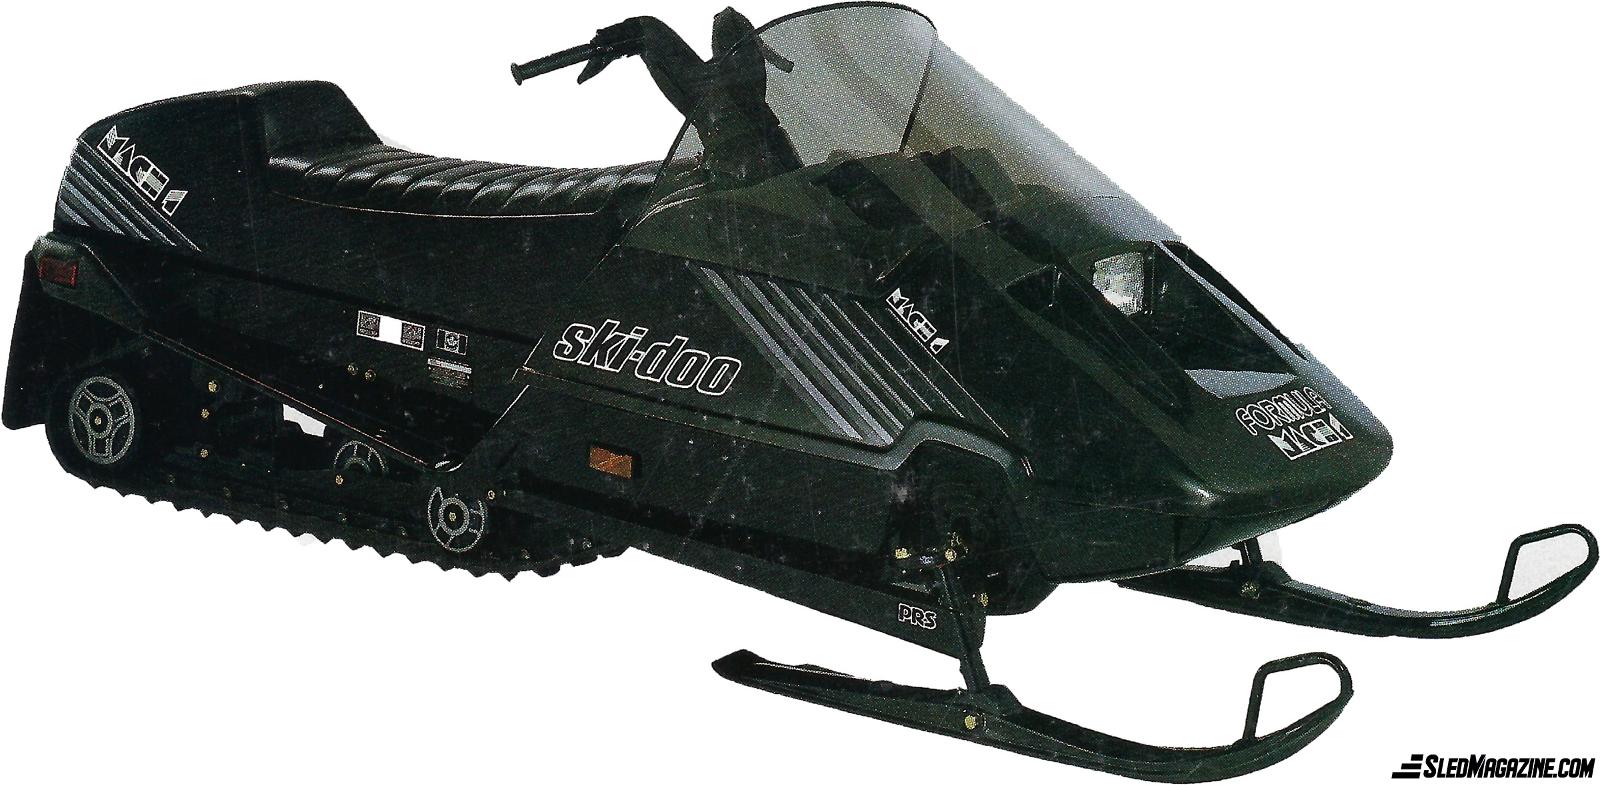 MACH Z the Return of the Legend - snowmobile - Ski-Doo